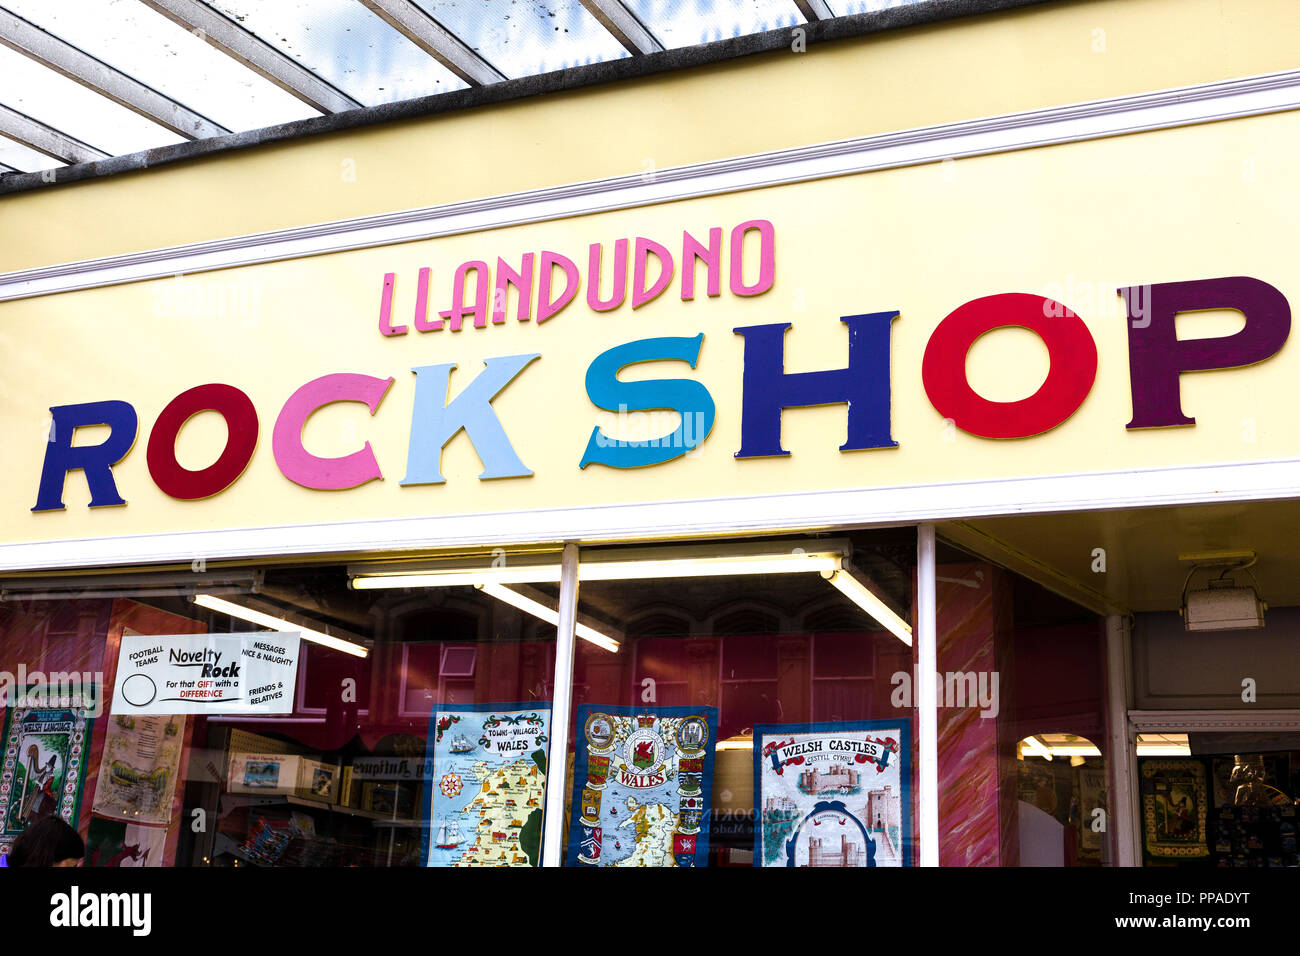 Rock shop llandudno wales hi-res stock photography and images - Alamy